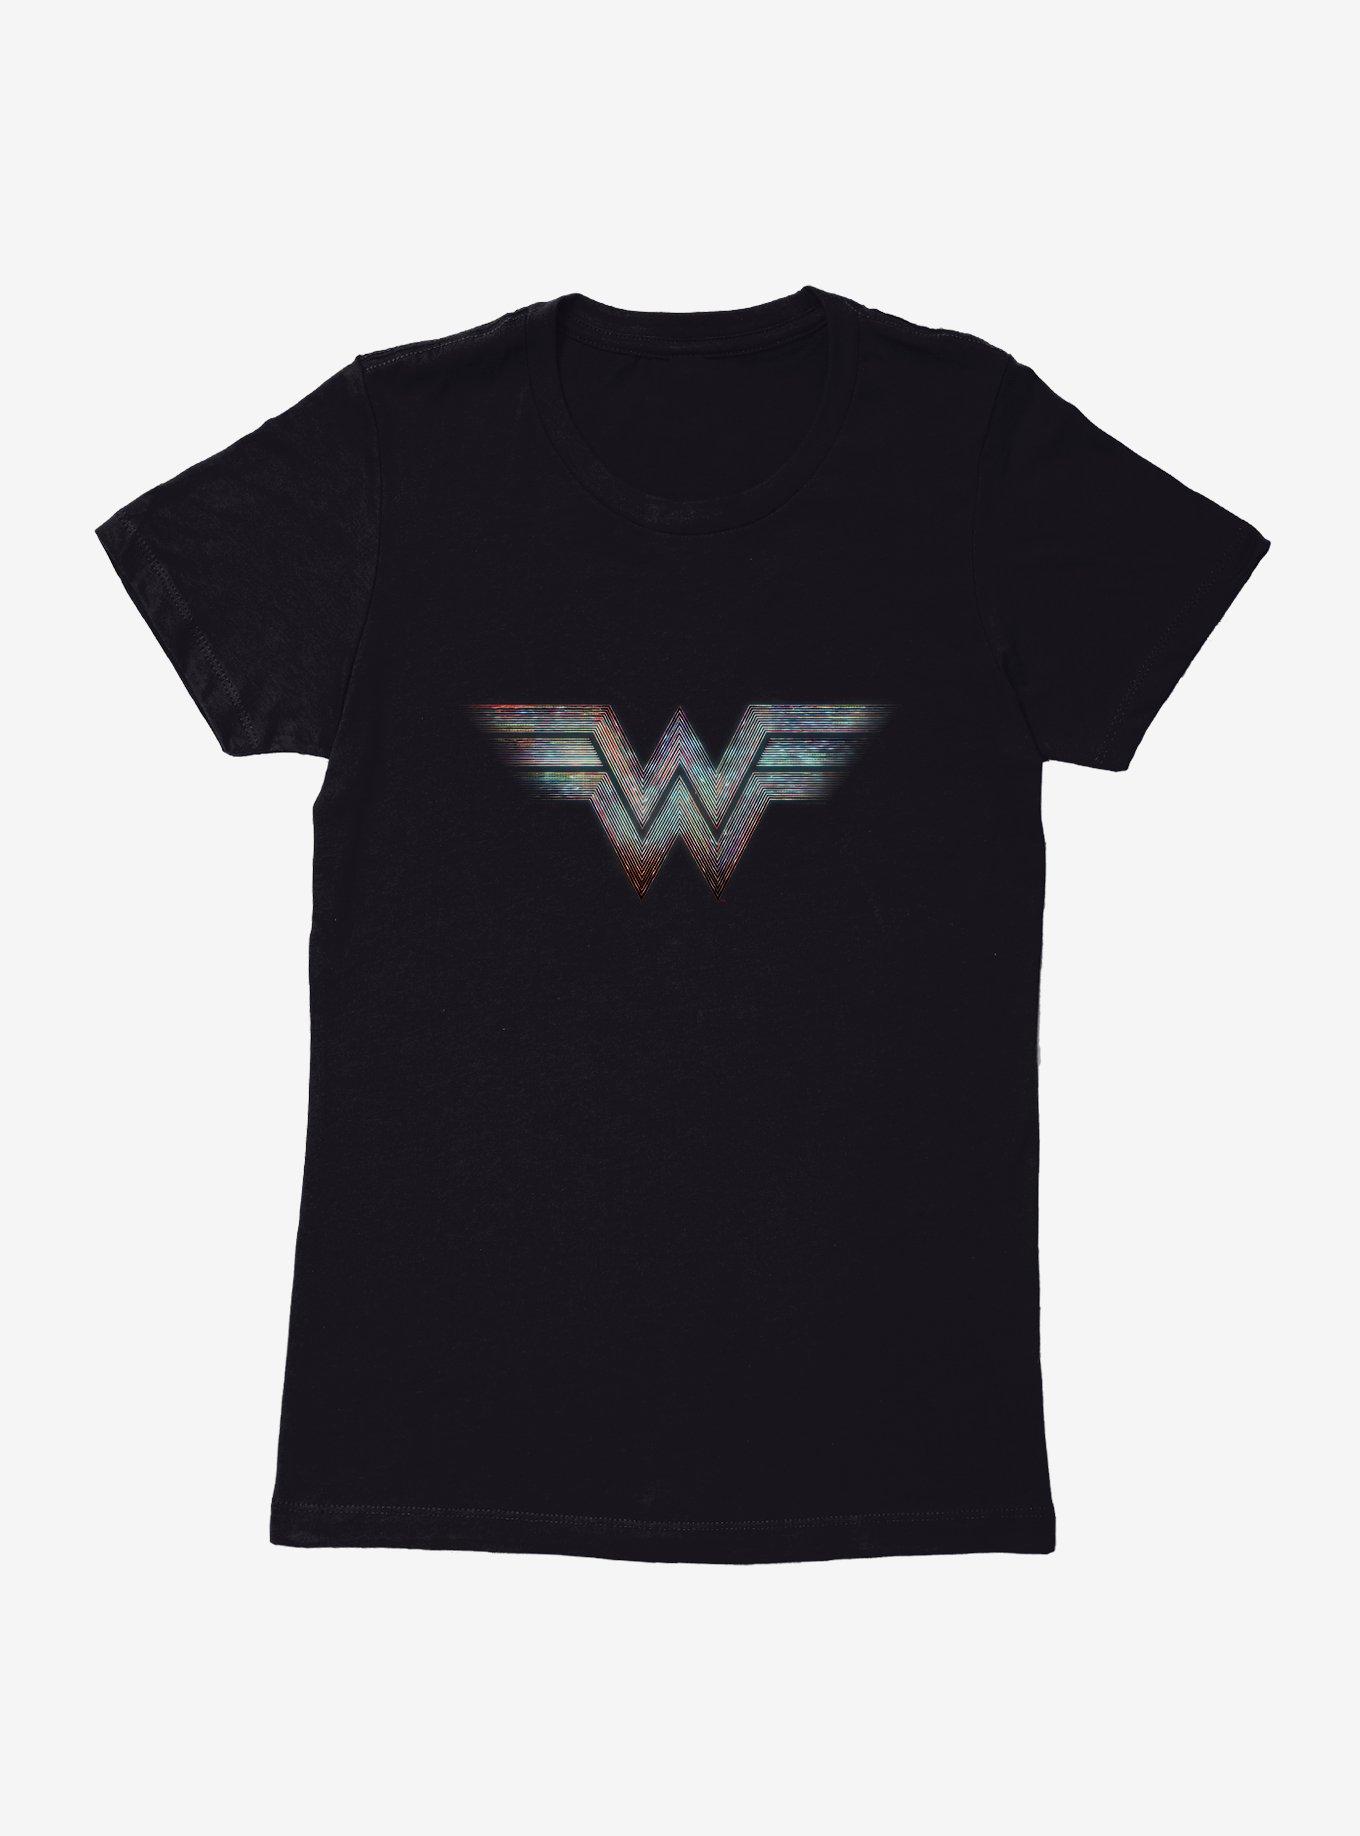 DC Comics Wonder Woman 1984 Multicolored Logo Womens T-Shirt, , hi-res